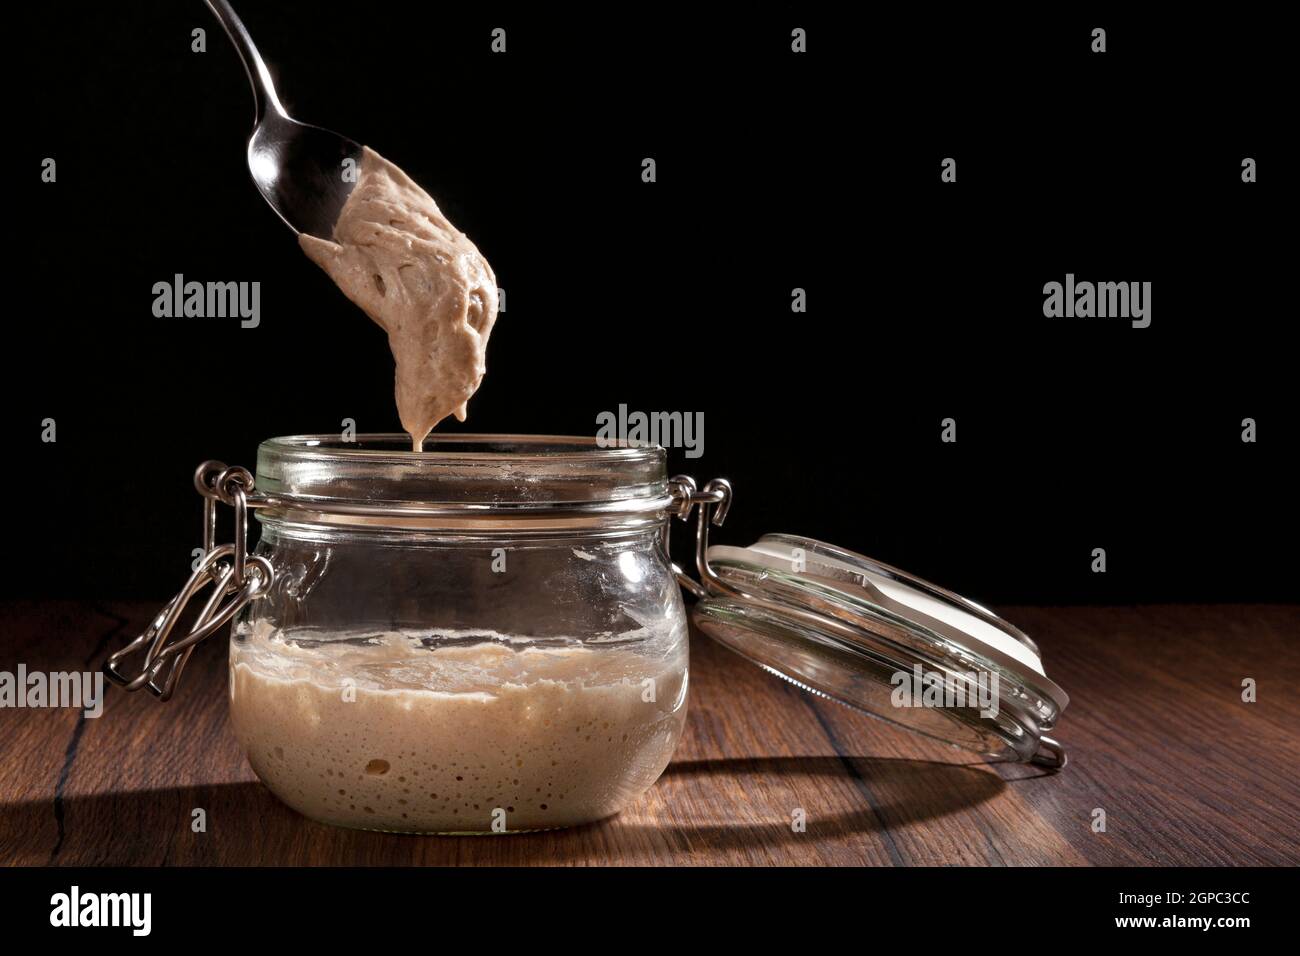 Sourdough starter in glass jar. Bread making background. Yeast. Stock Photo